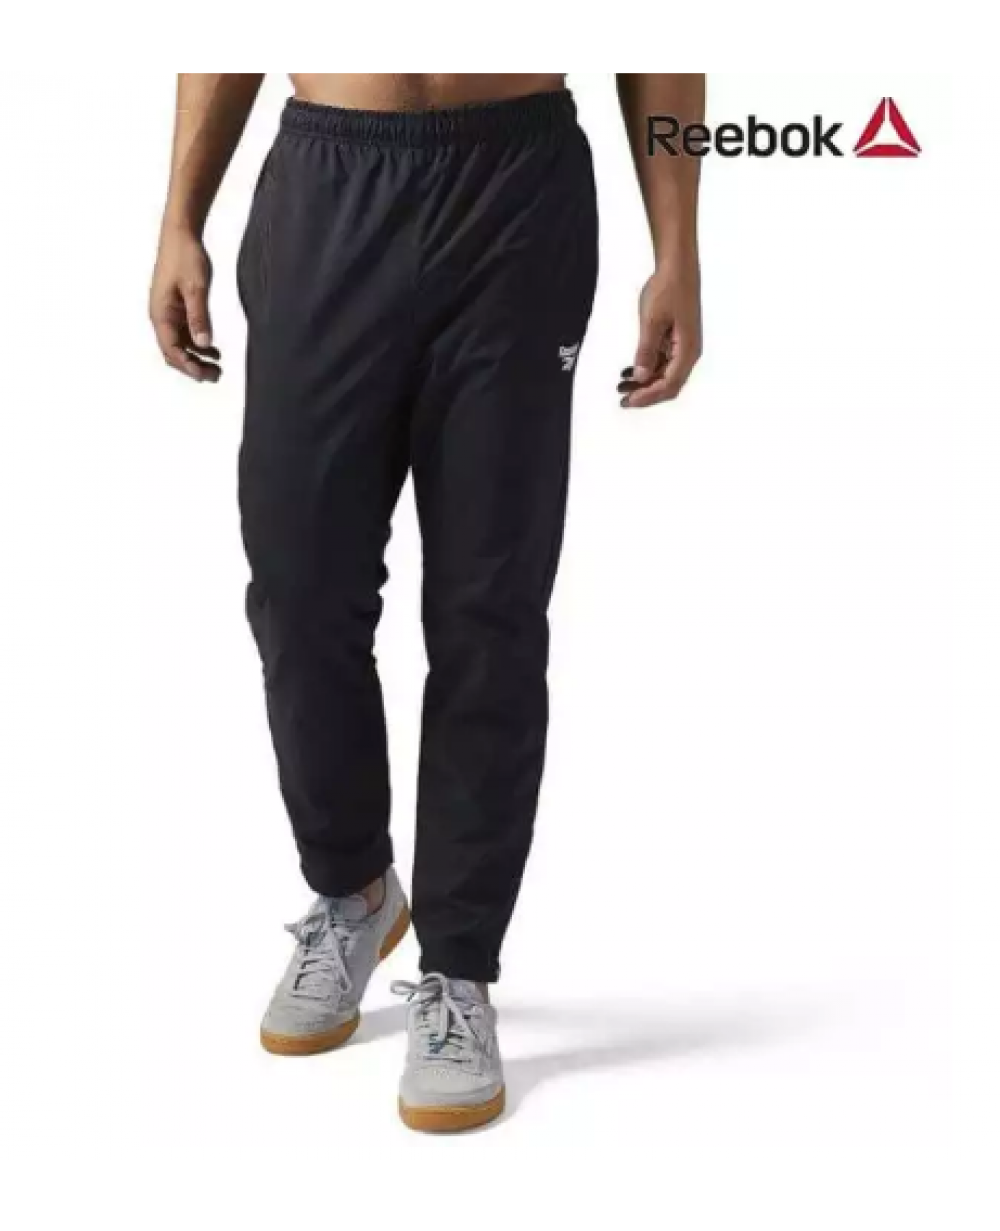 Reebok Workout Ready Track Pant Mens Athletic Pants : Target